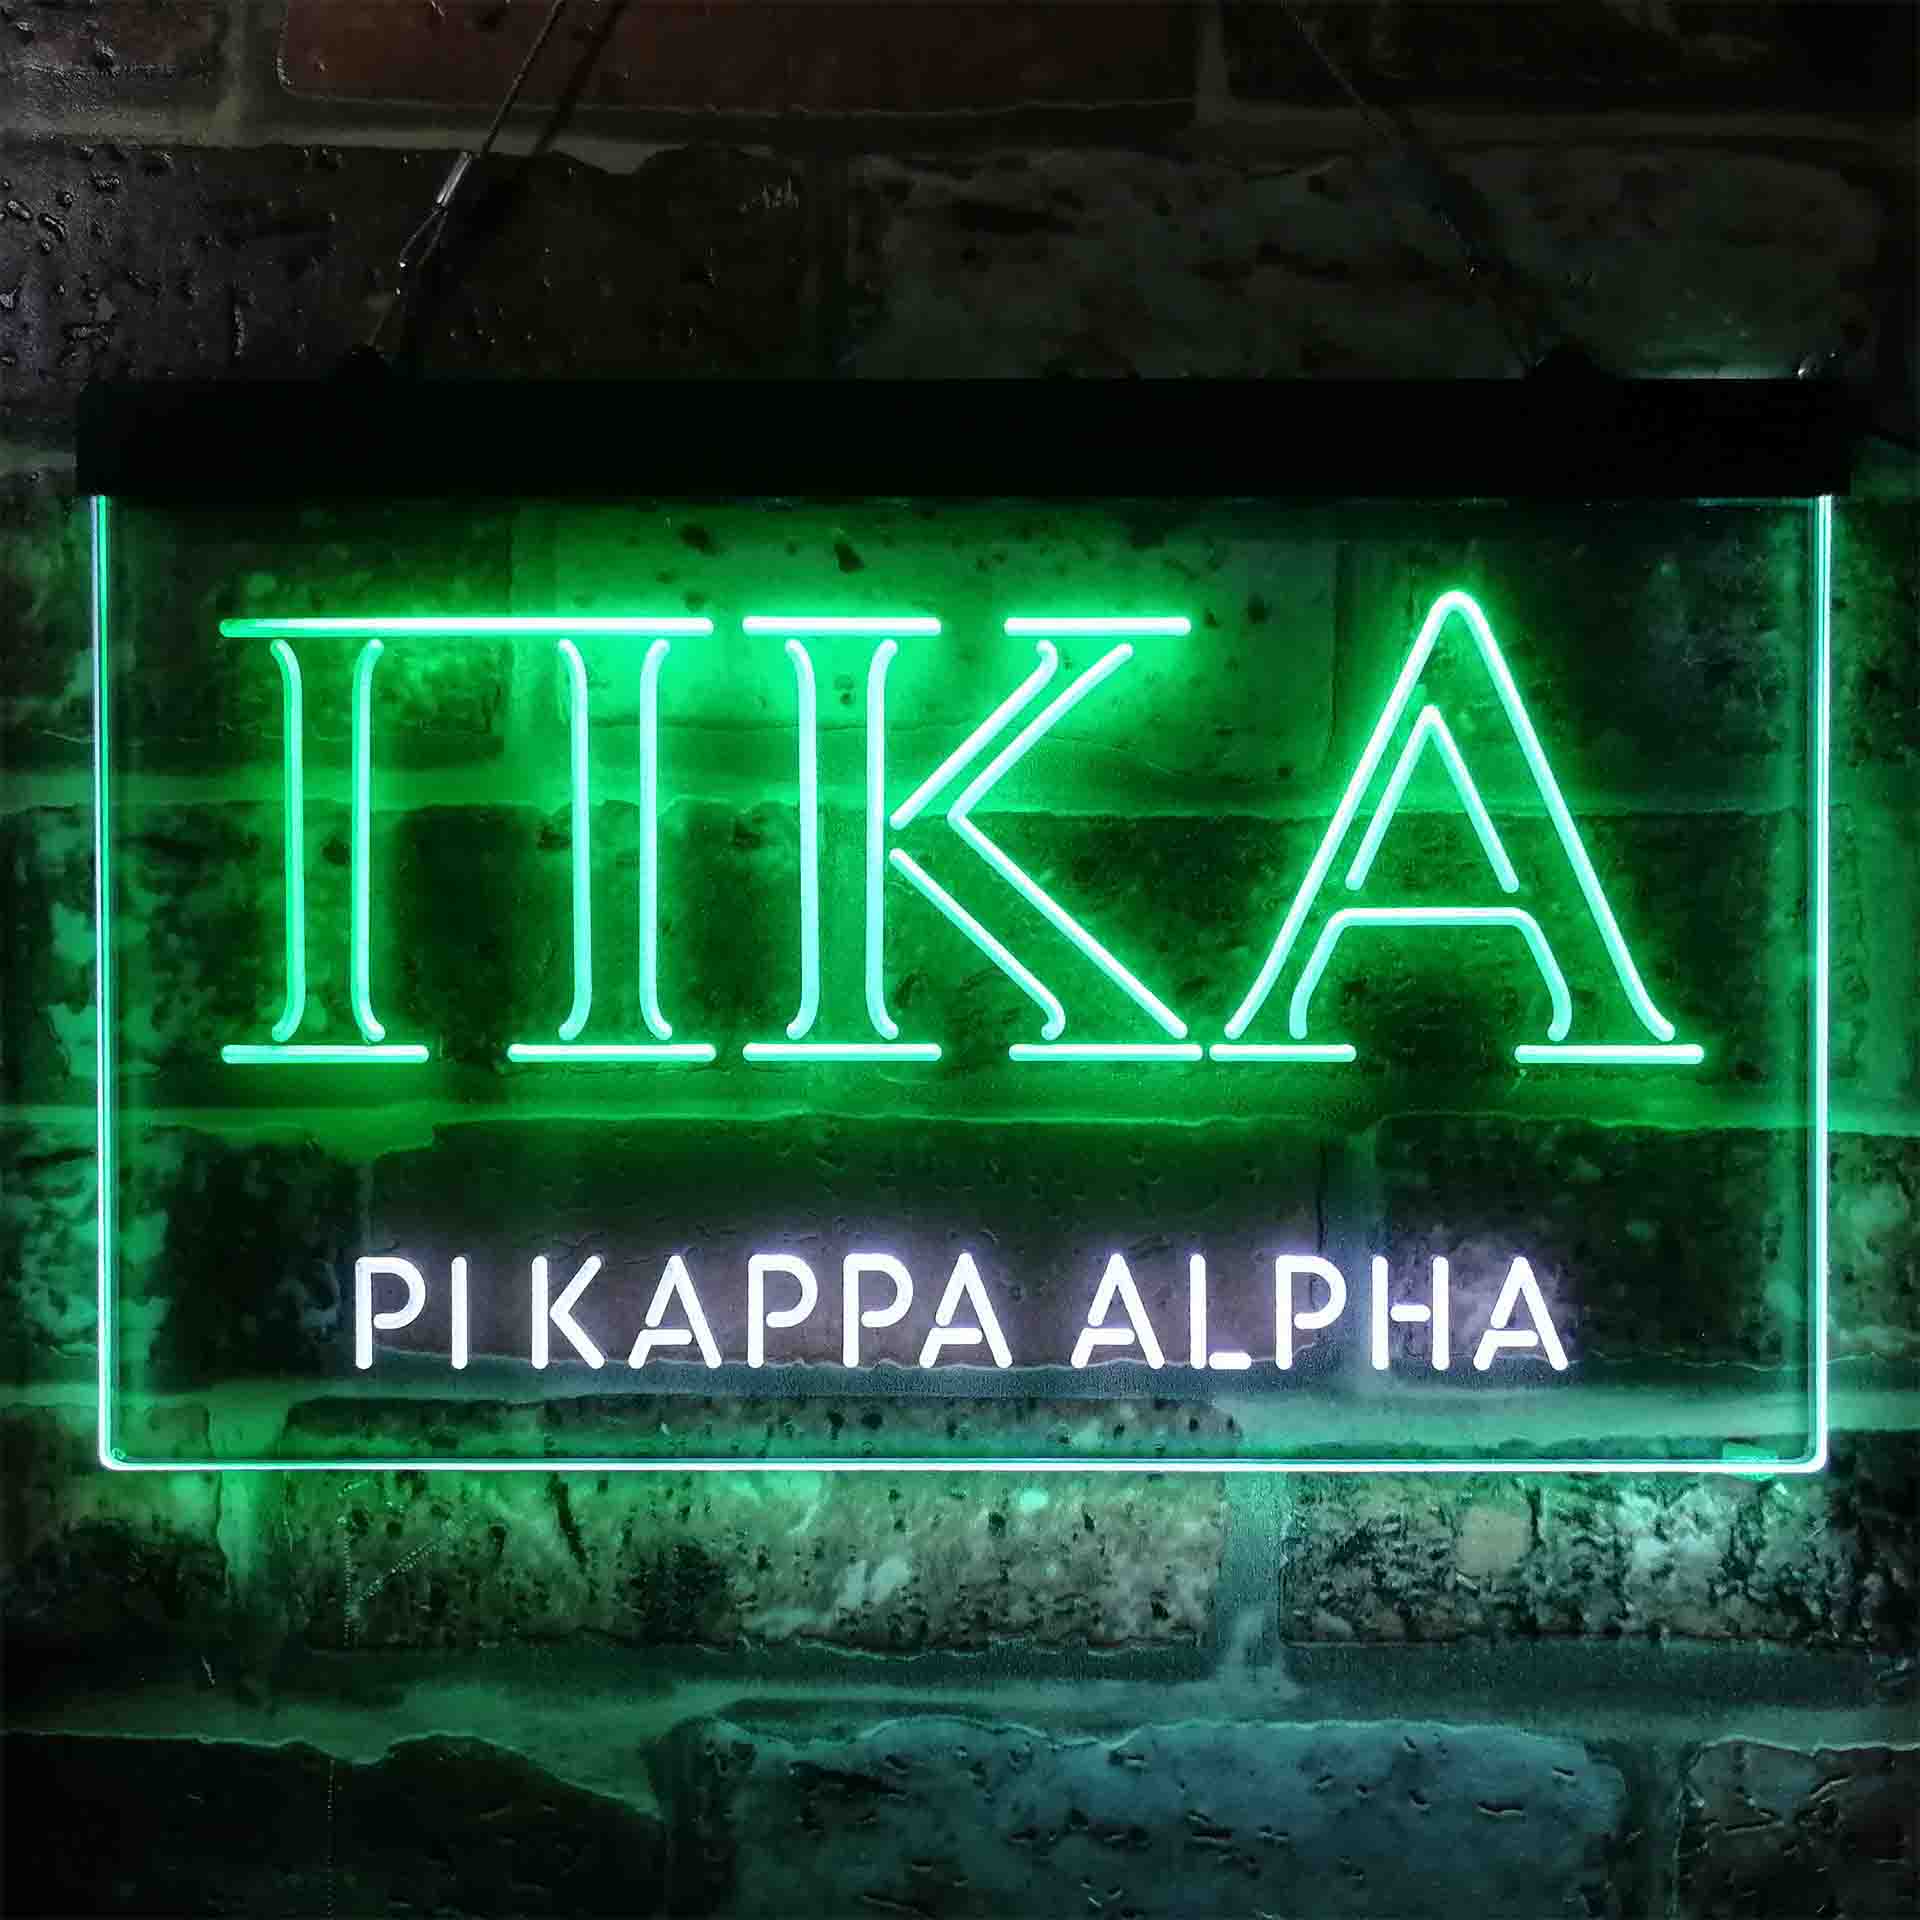 Pi Kappa Alpha Fraternity Greek Letter Organization Neon-Like LED Sign